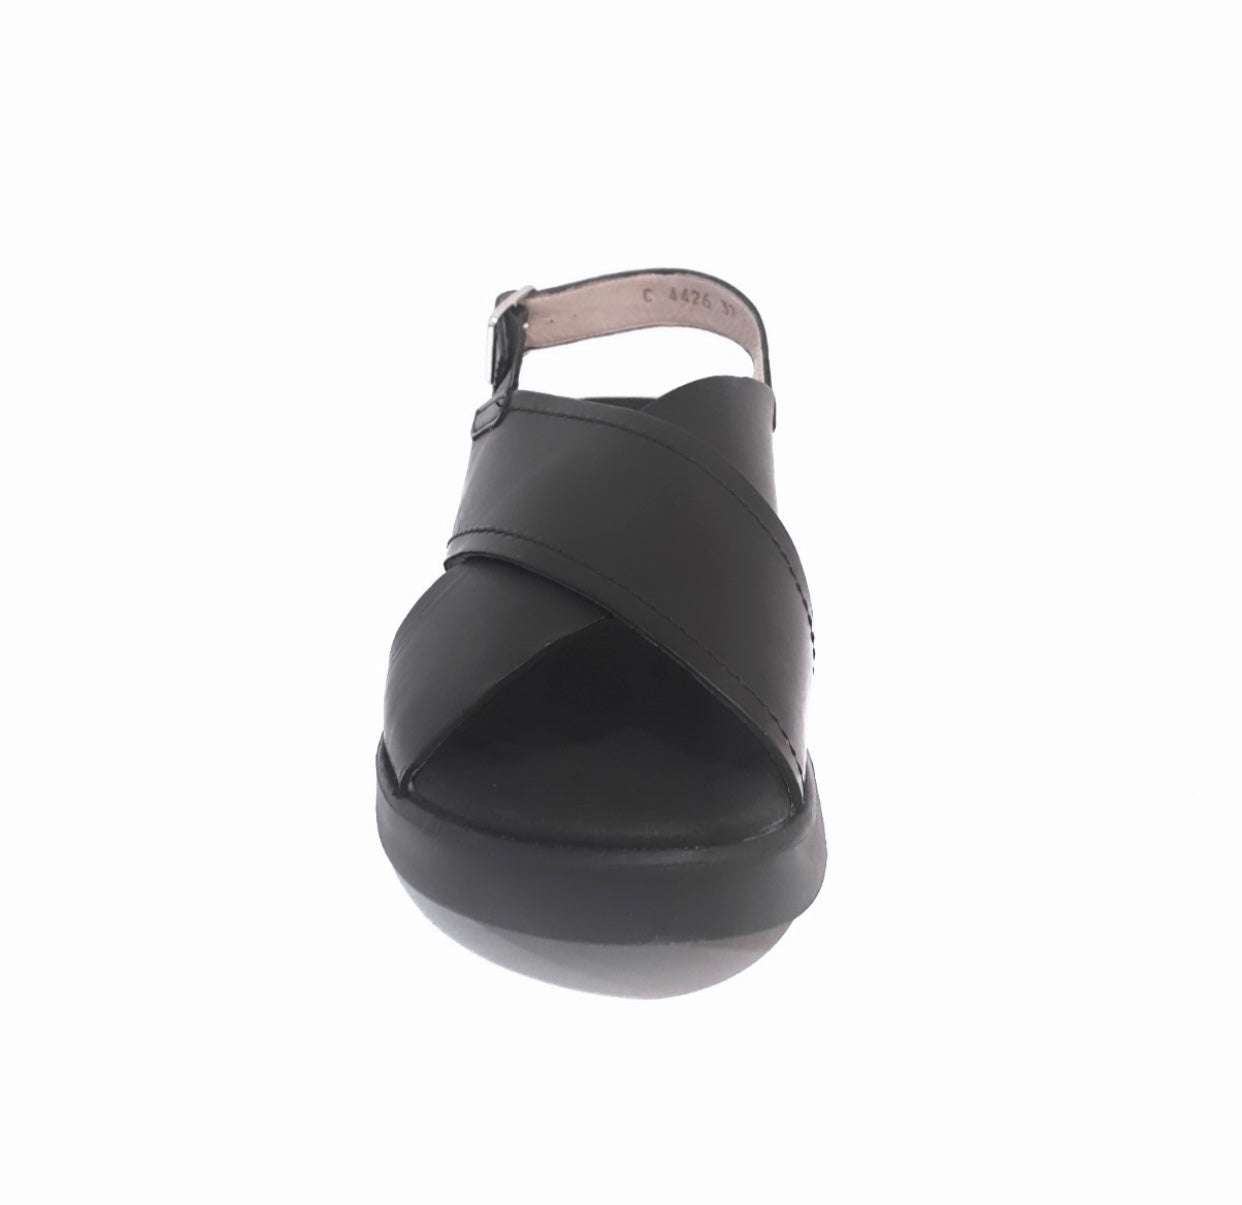 Wonders C-4426 Black Negro Pergamena Leather Cross Over Straps Sandals Made In Spain